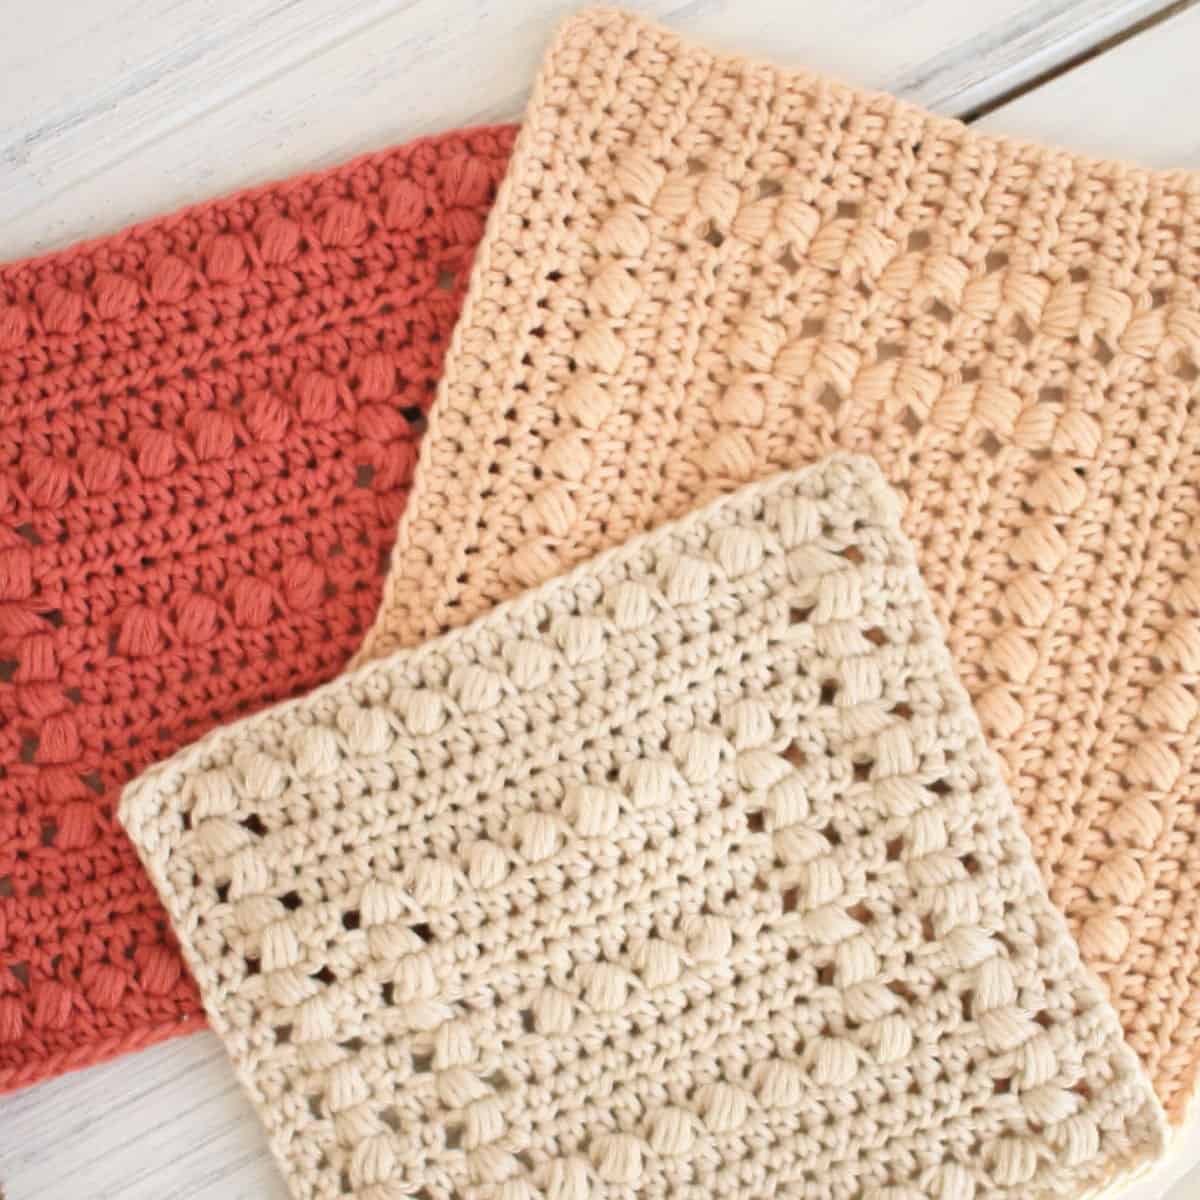 Basin Hollow Crochet Dishcloth Patterns